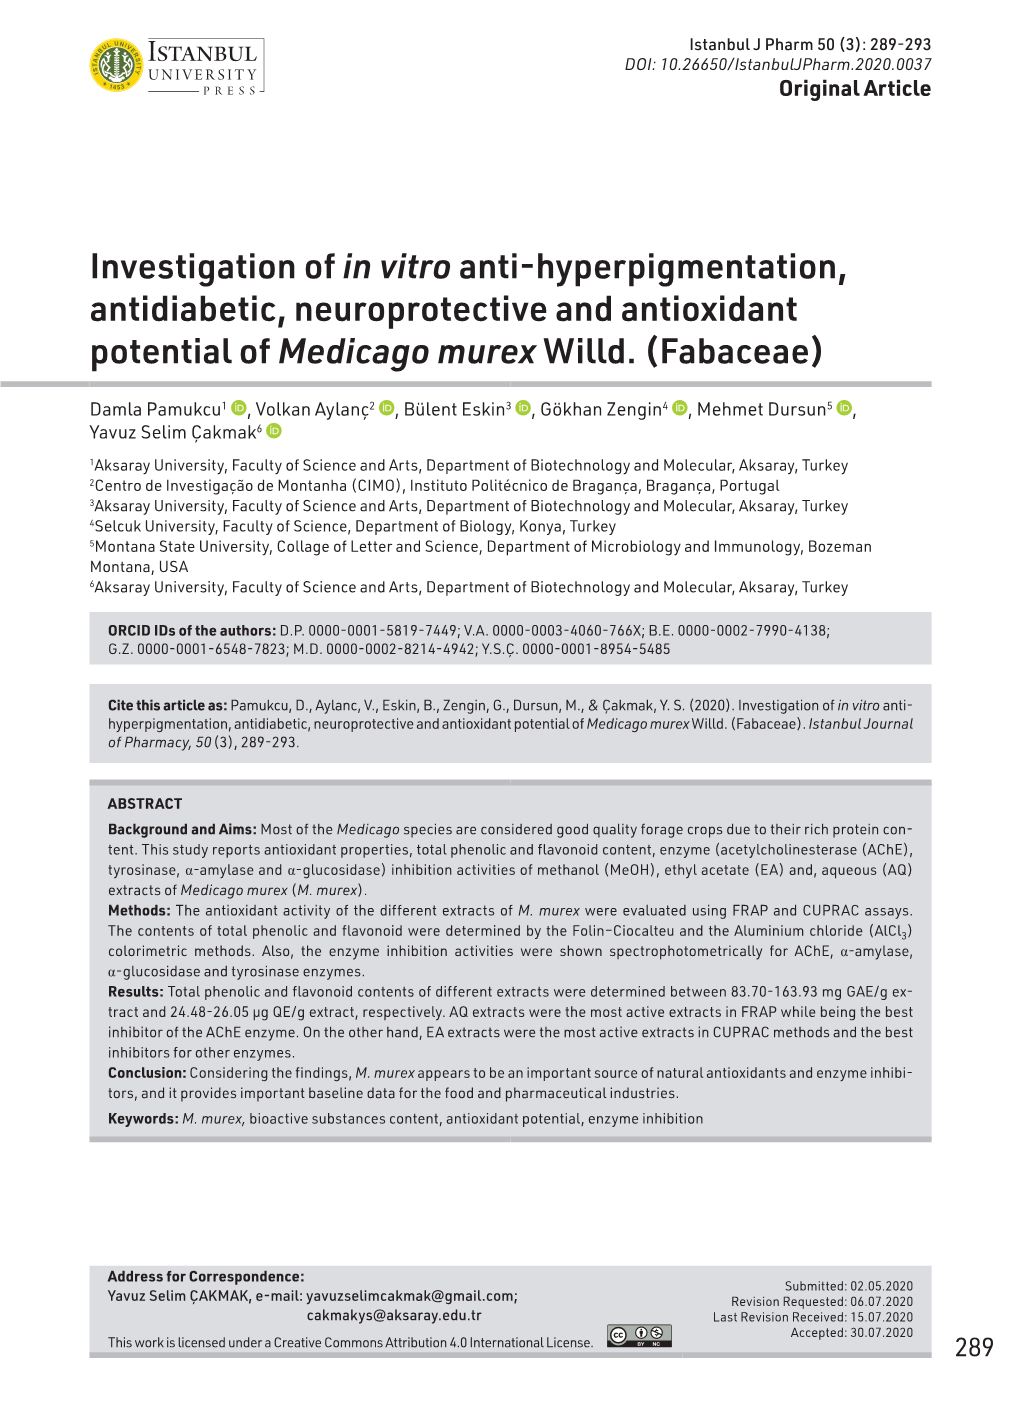 Investigation of in Vitro Anti-Hyperpigmentation, Antidiabetic, Neuroprotective and Antioxidant Potential of Medicago Murex Willd